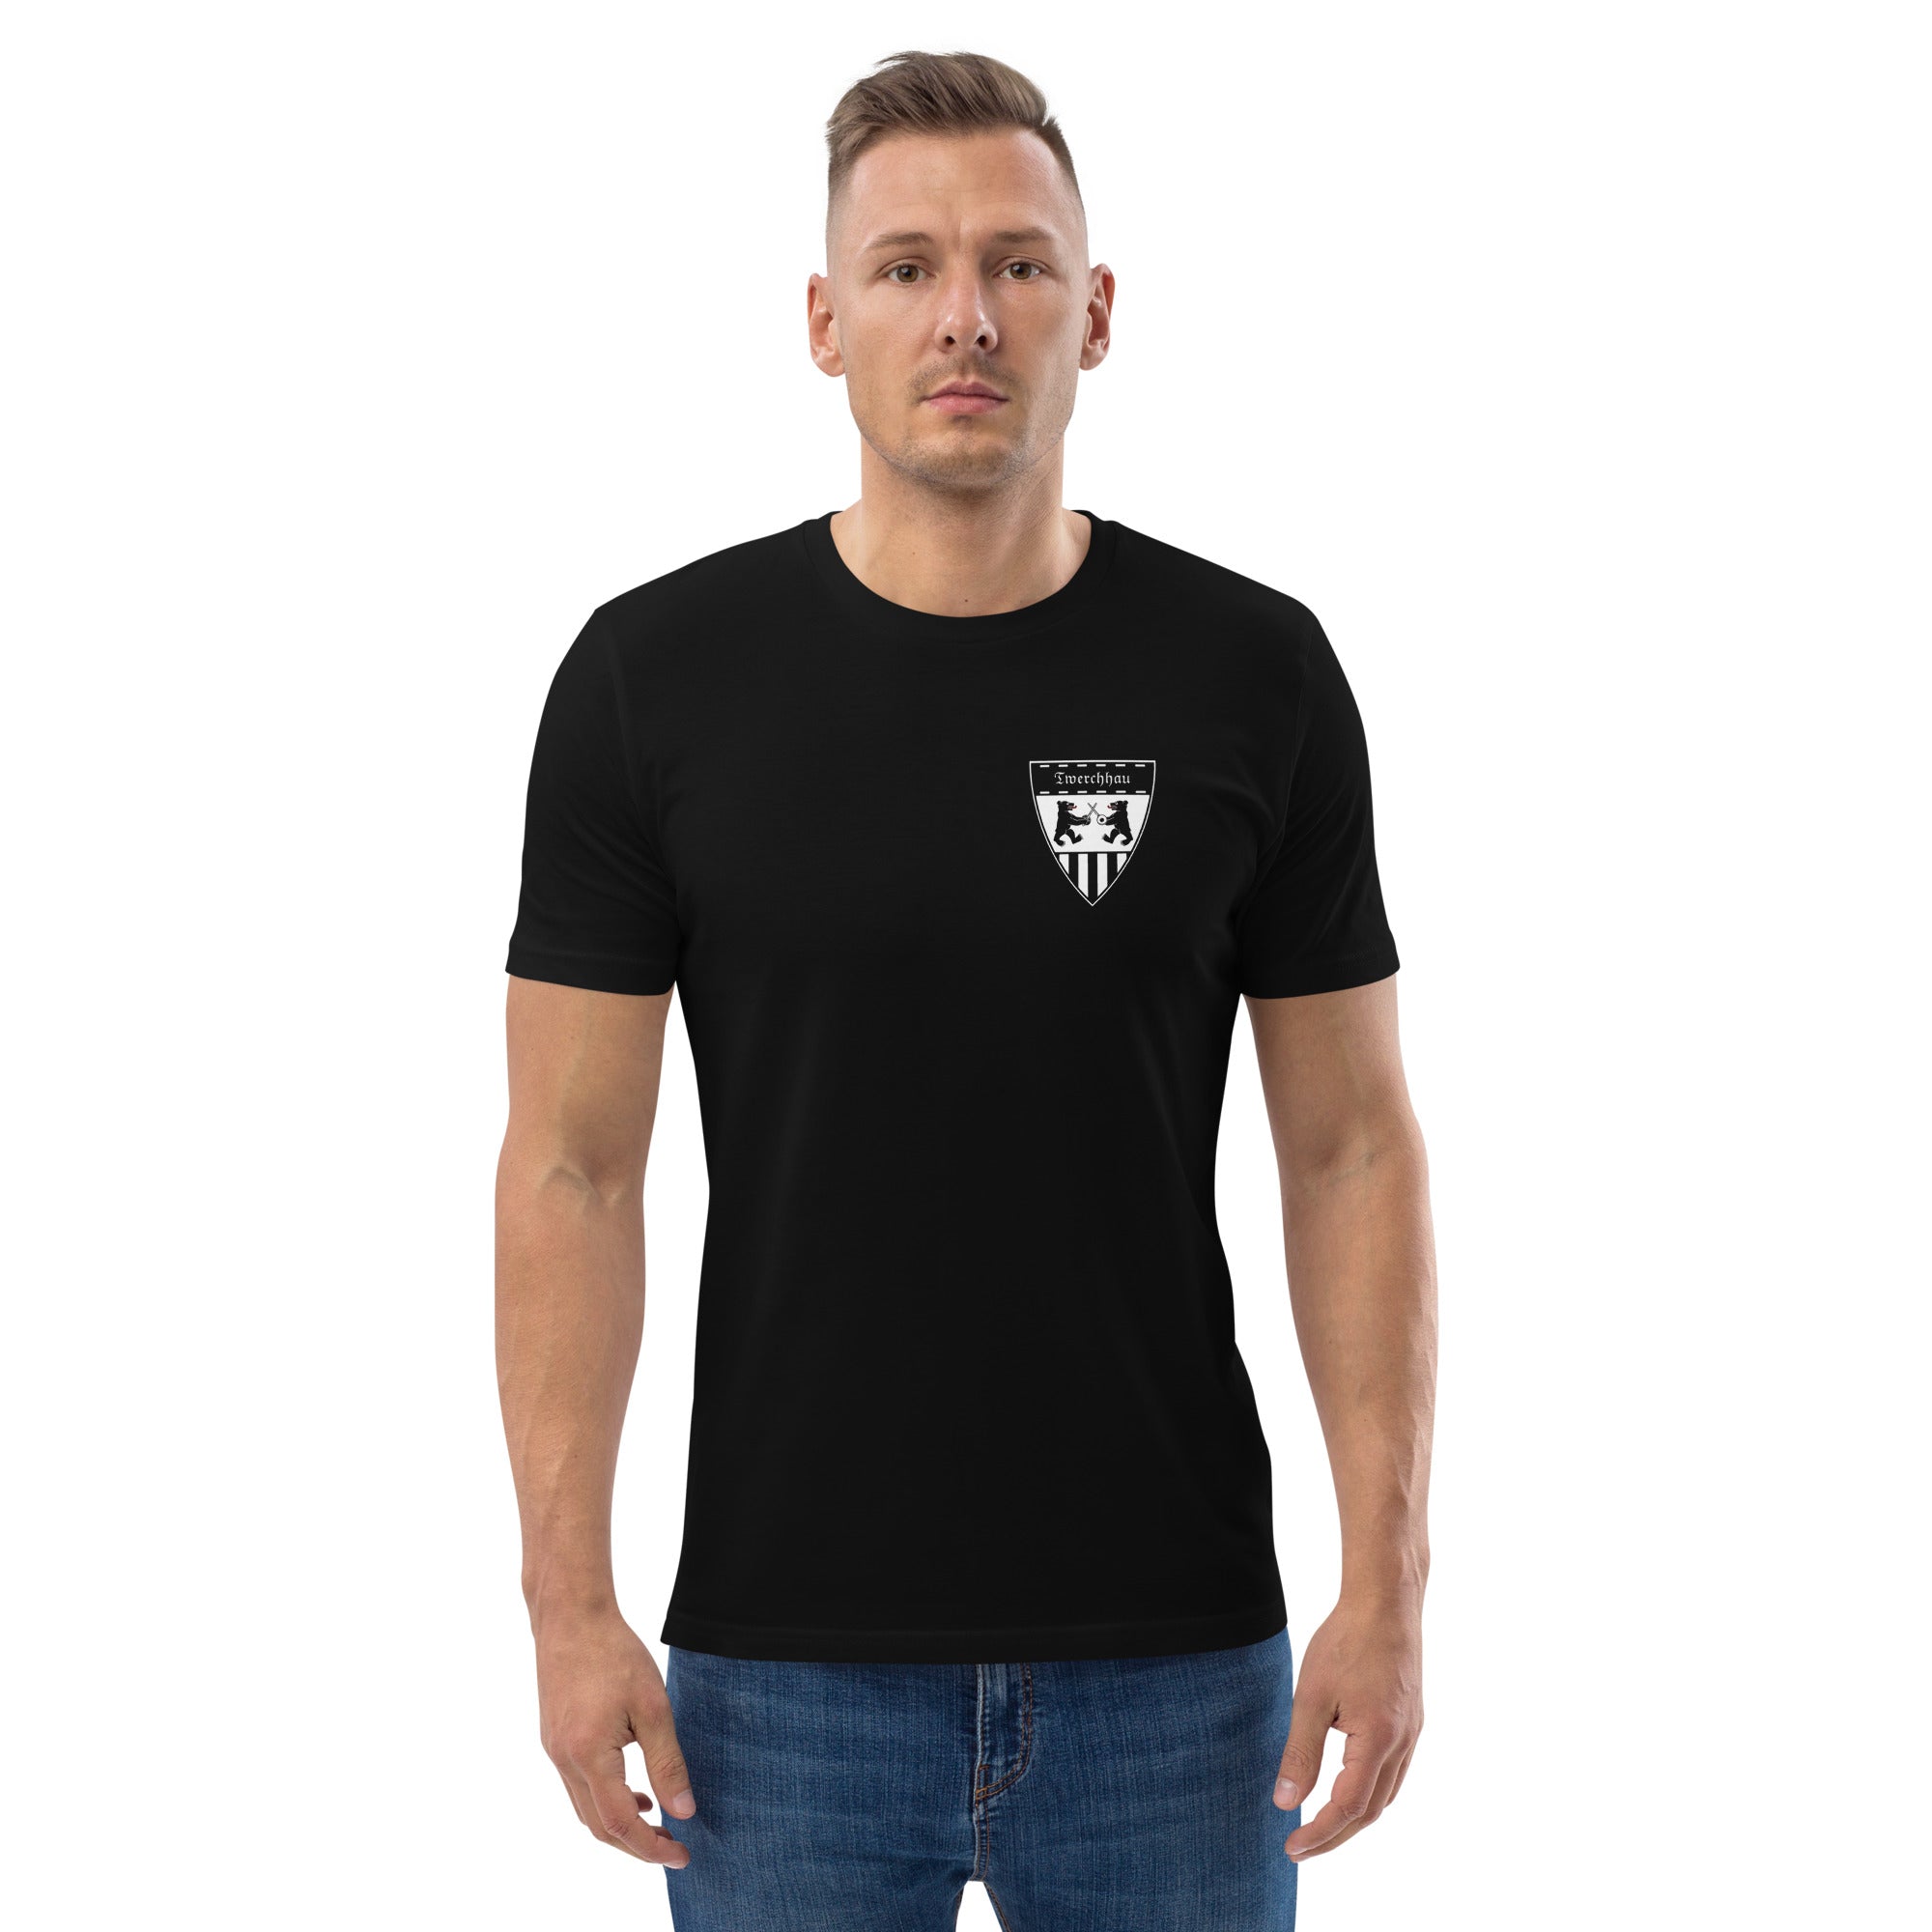 Twerchhau - Bio-Baumwoll-T-Shirt